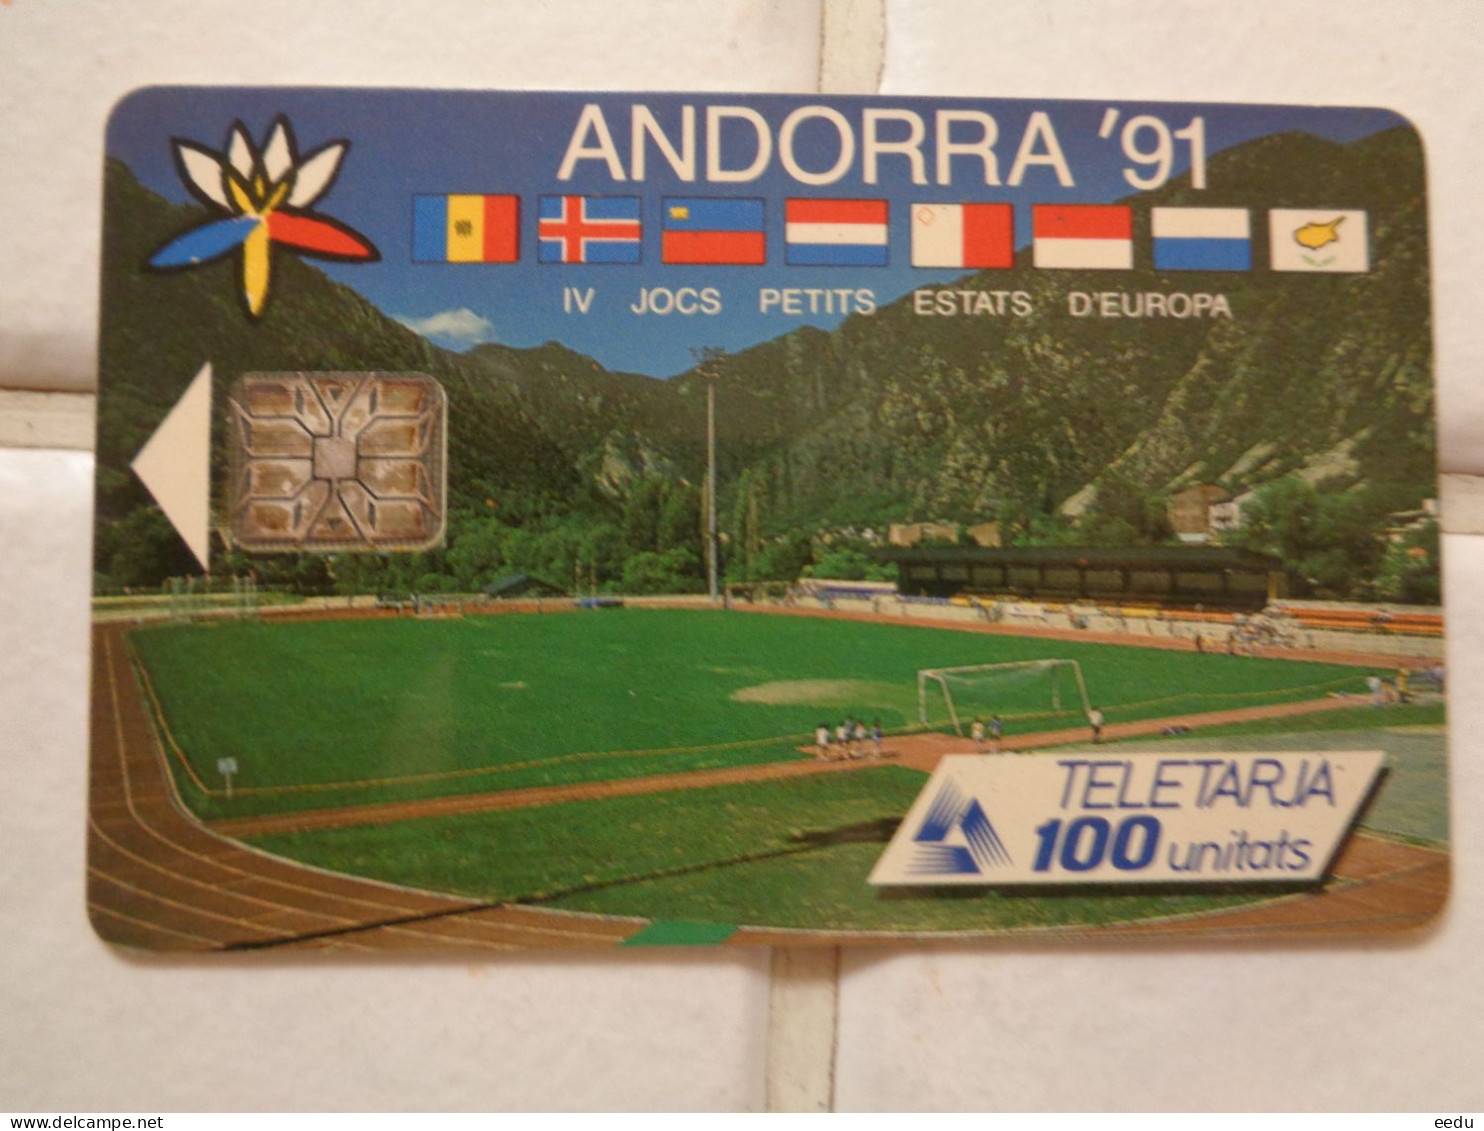 Andorra Phonecard - Andorra